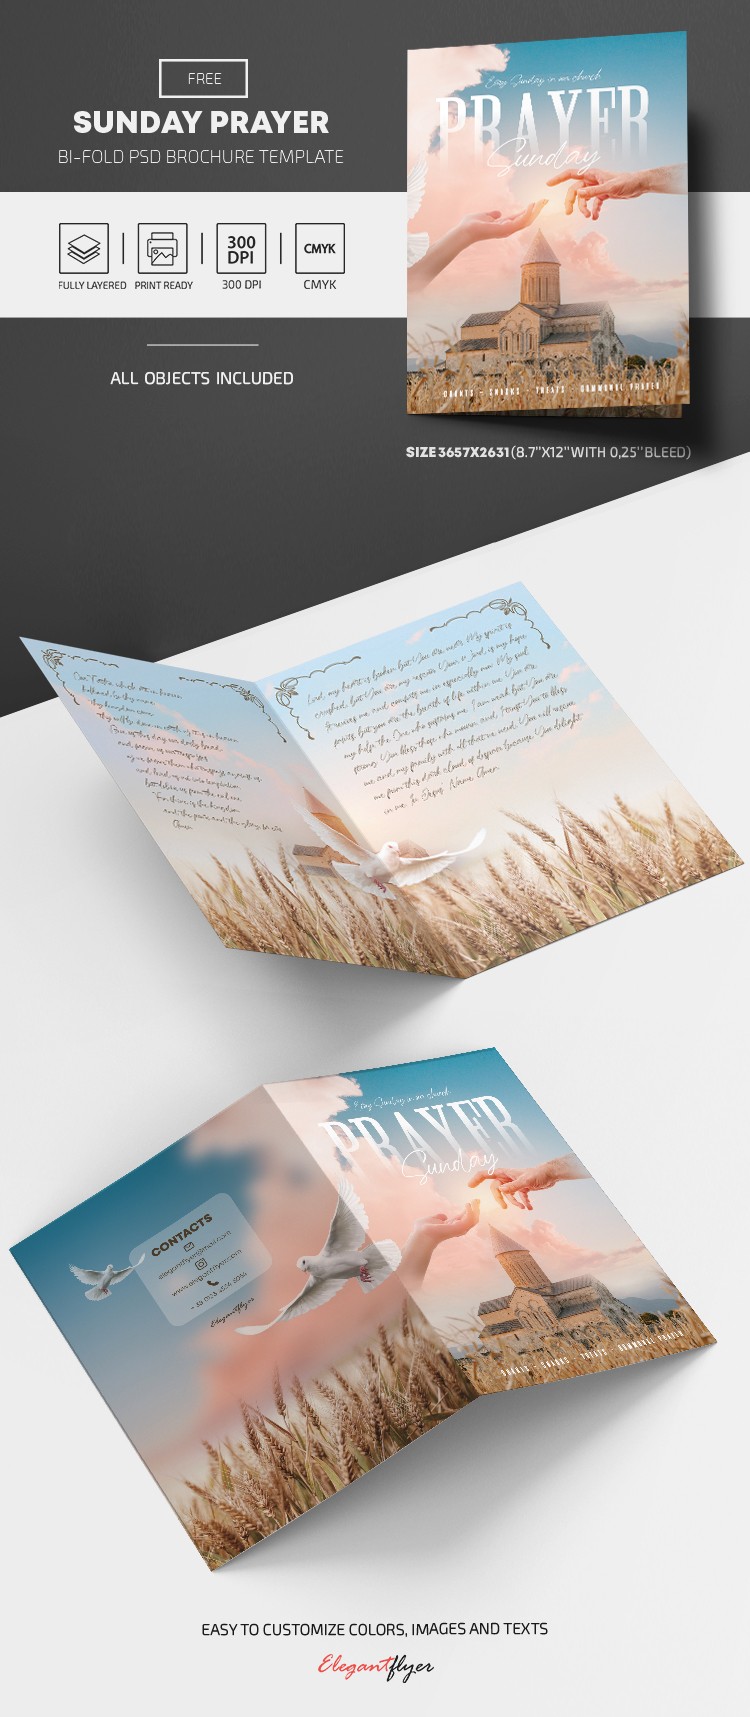 Folleto de oración dominical en formato bi-fold by ElegantFlyer